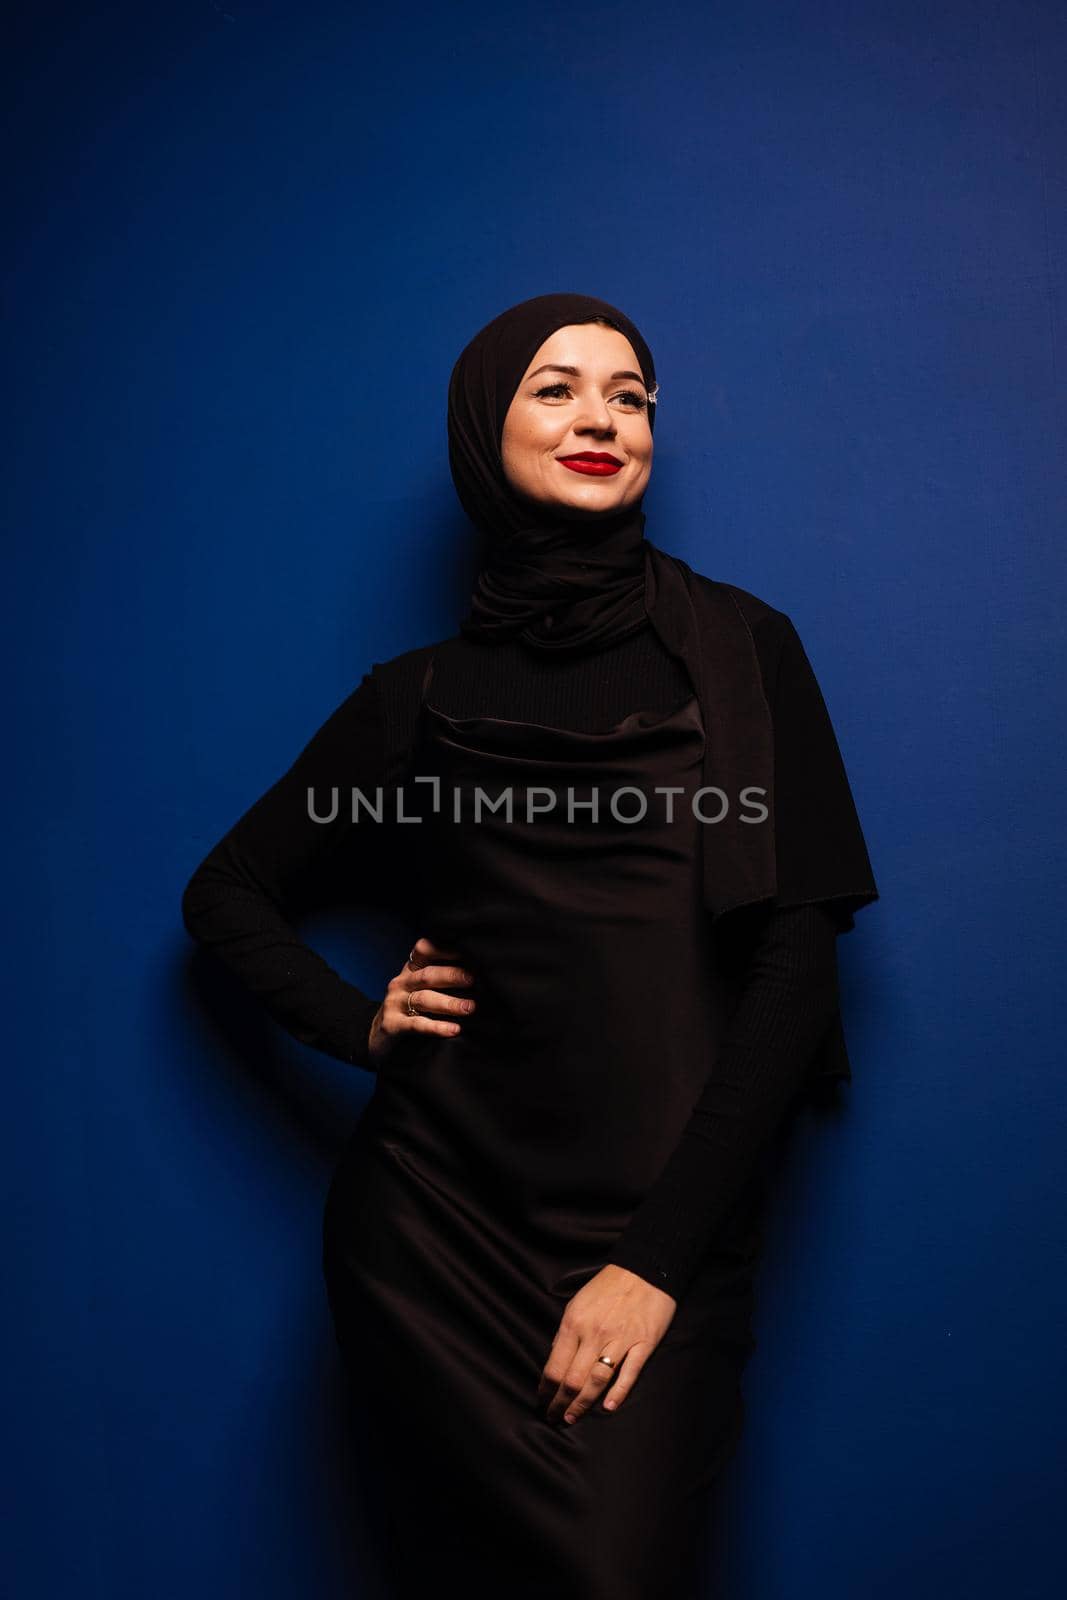 Fashion muslim model in black hijab is posing on blue background in studio. Islam religion. by Rabizo